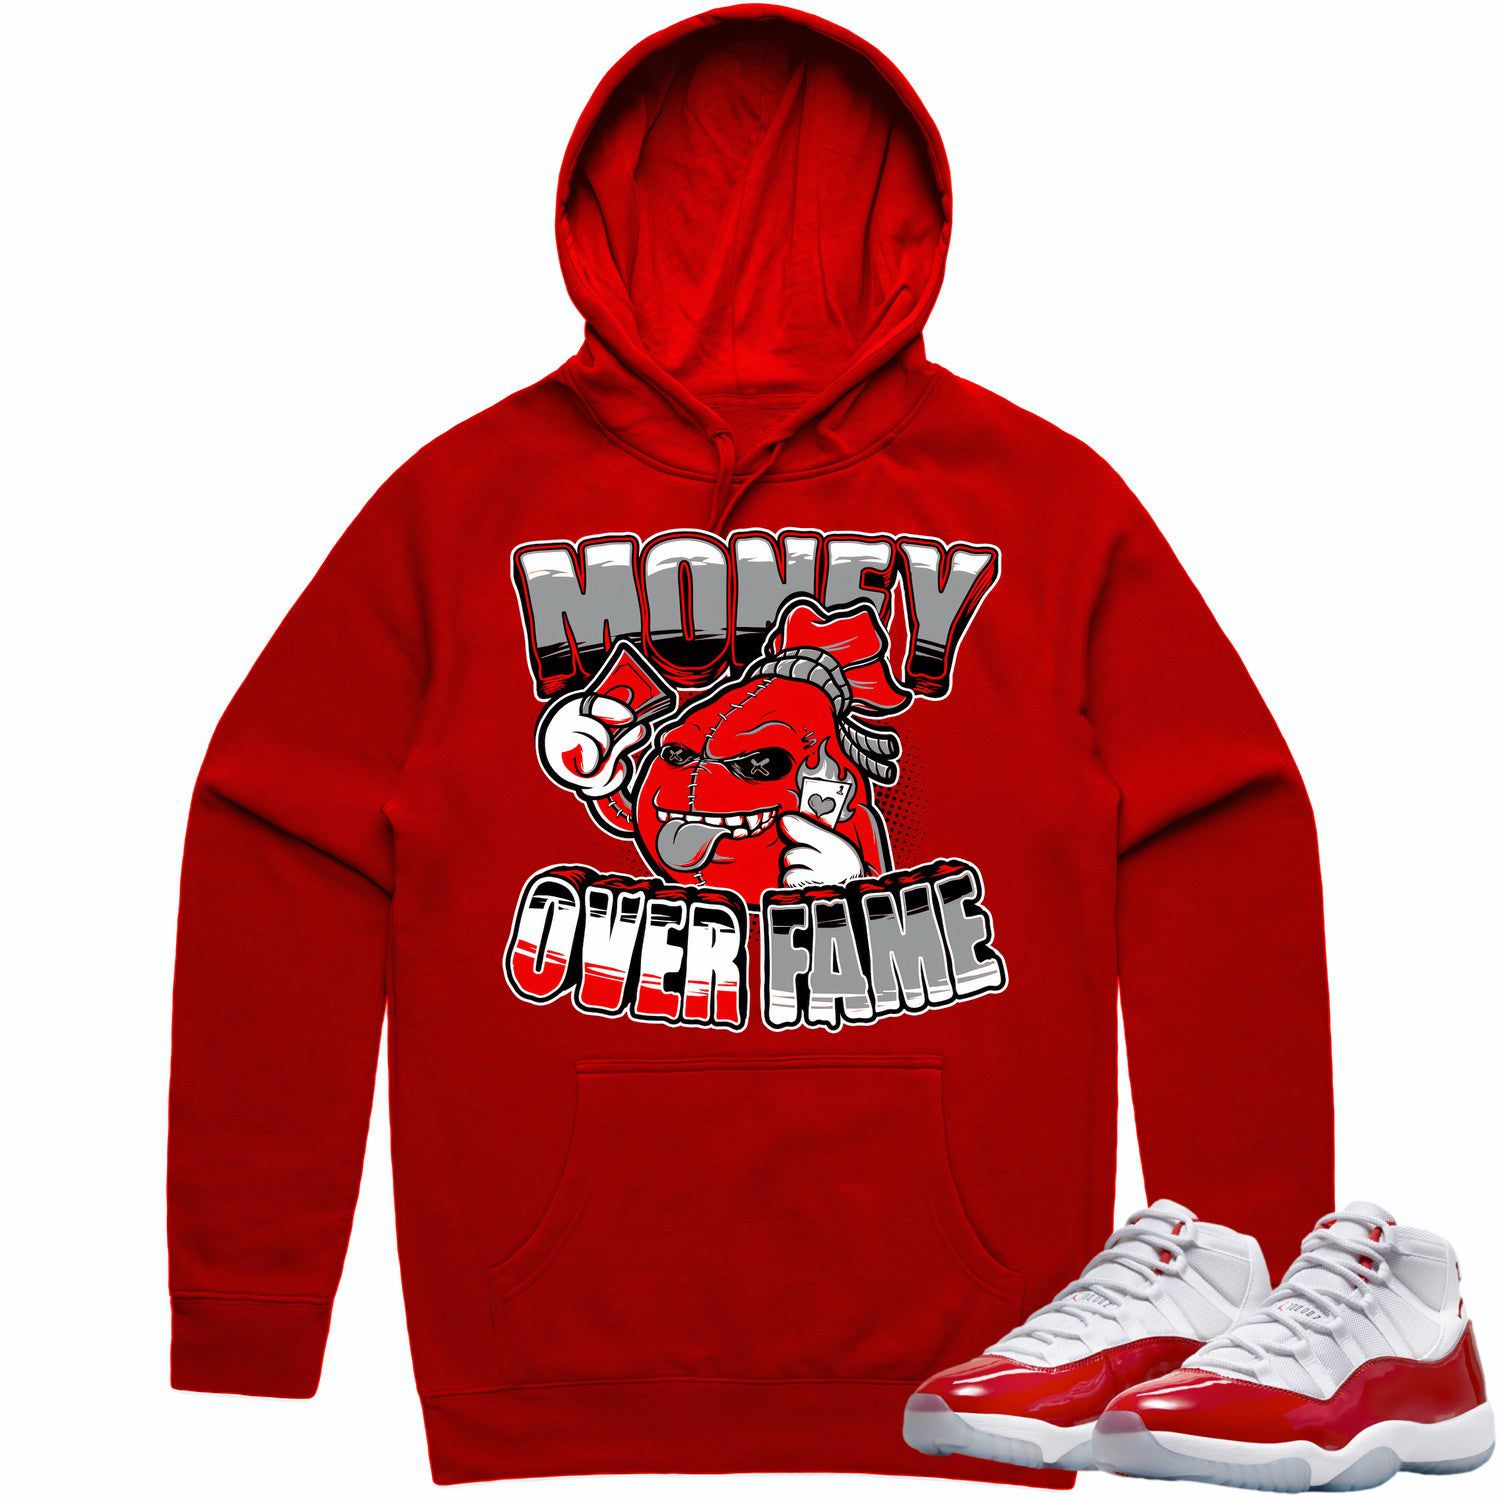 Cherry 11s Hoodie - Jordan Retro 11 Cherry Hoodie - Money over Fame